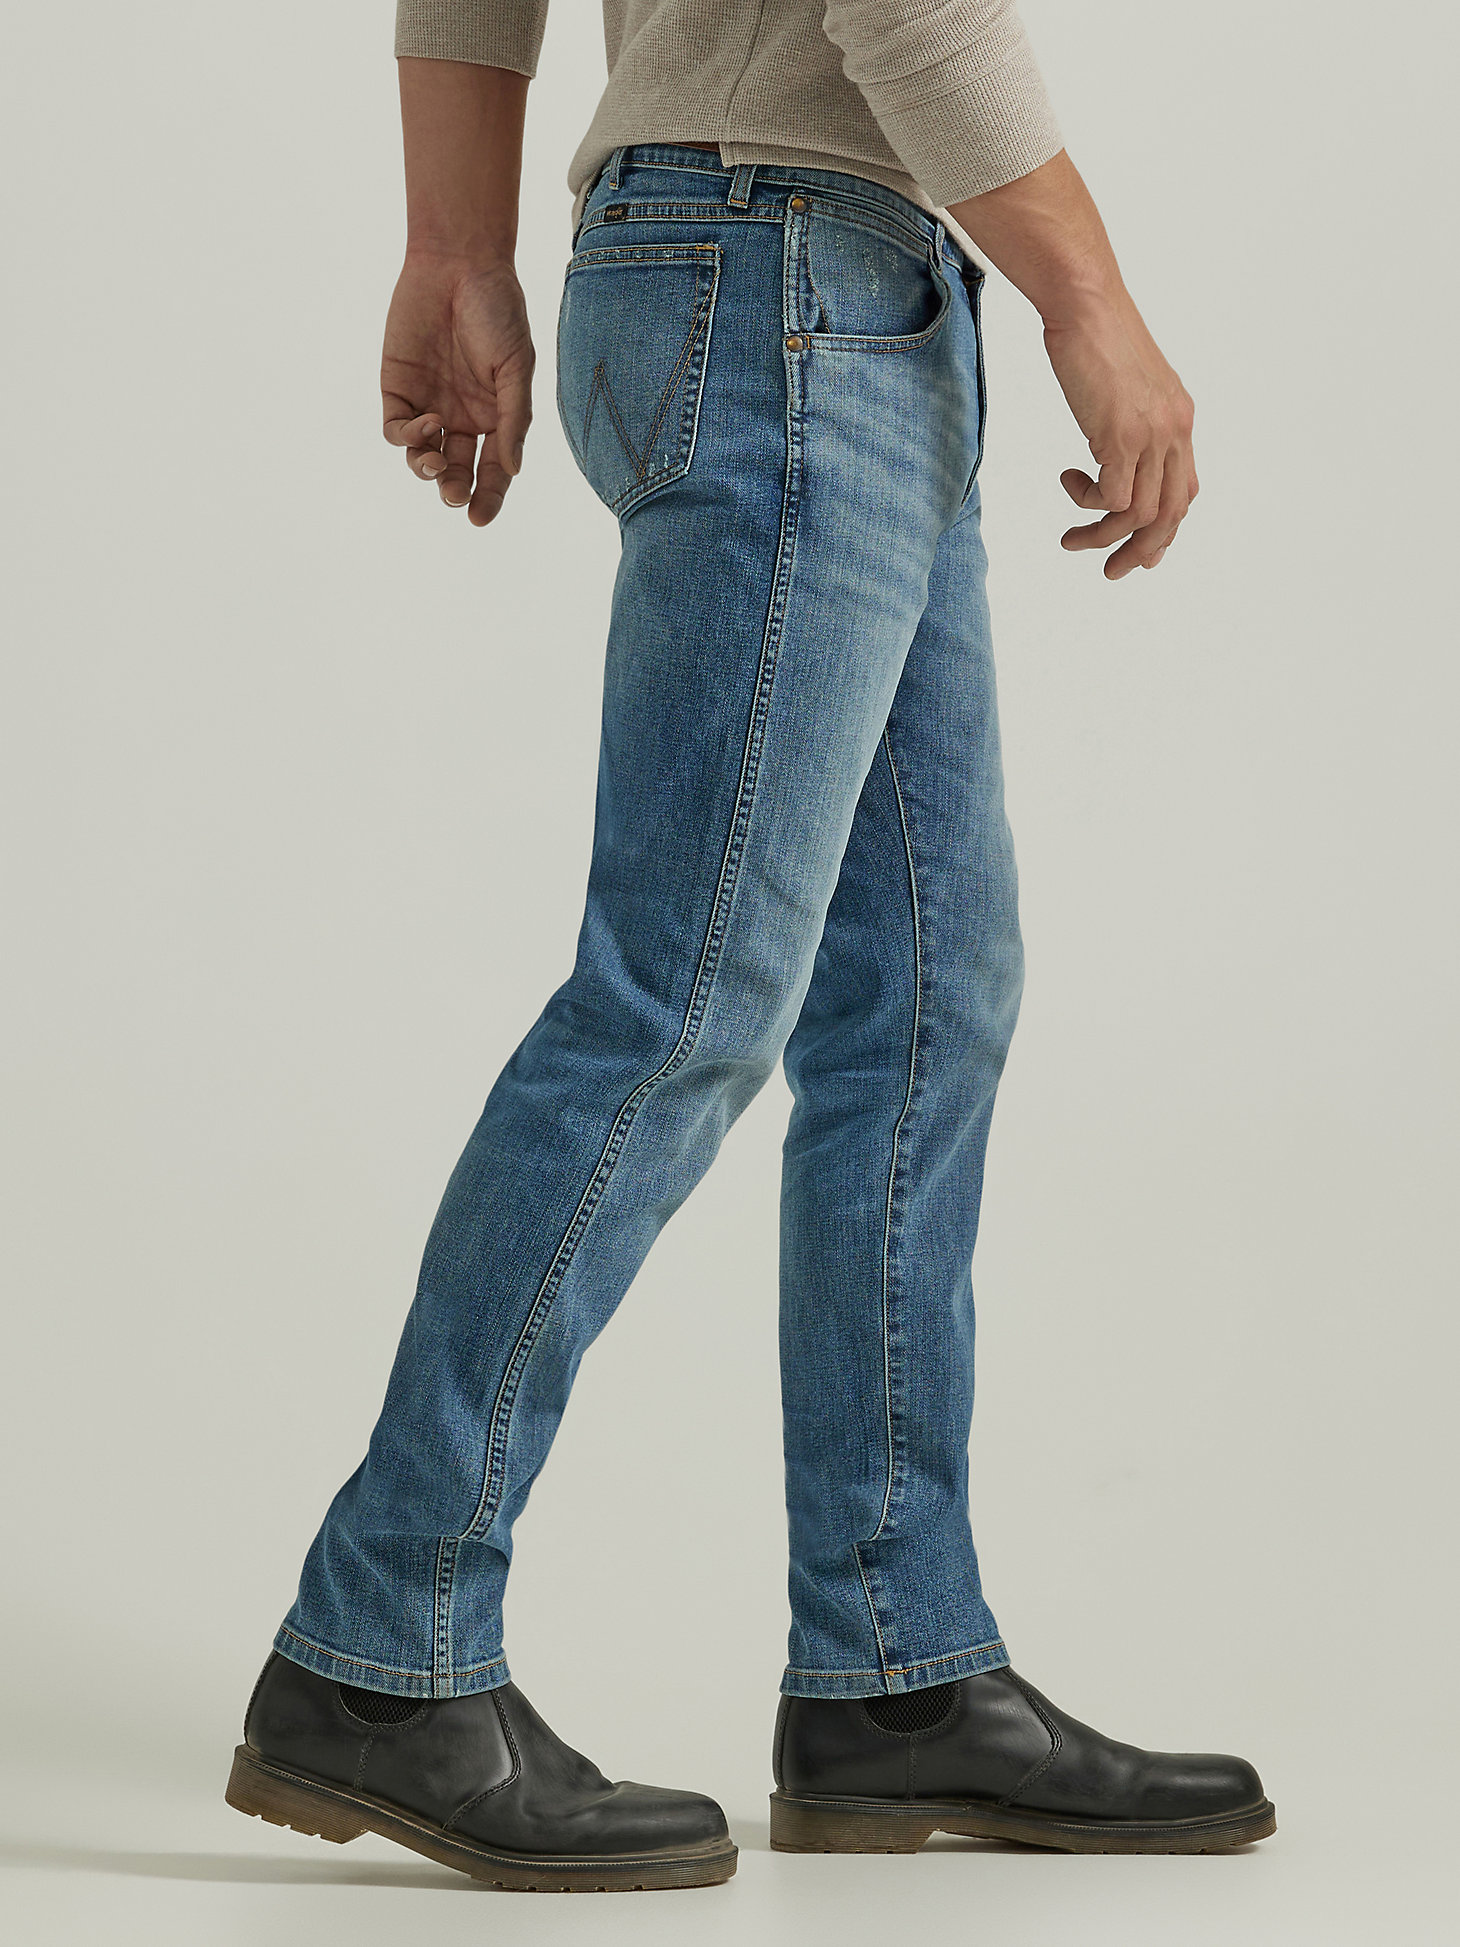 Men's Tapered Regular Fit Jean in Light Wash alternative view 2